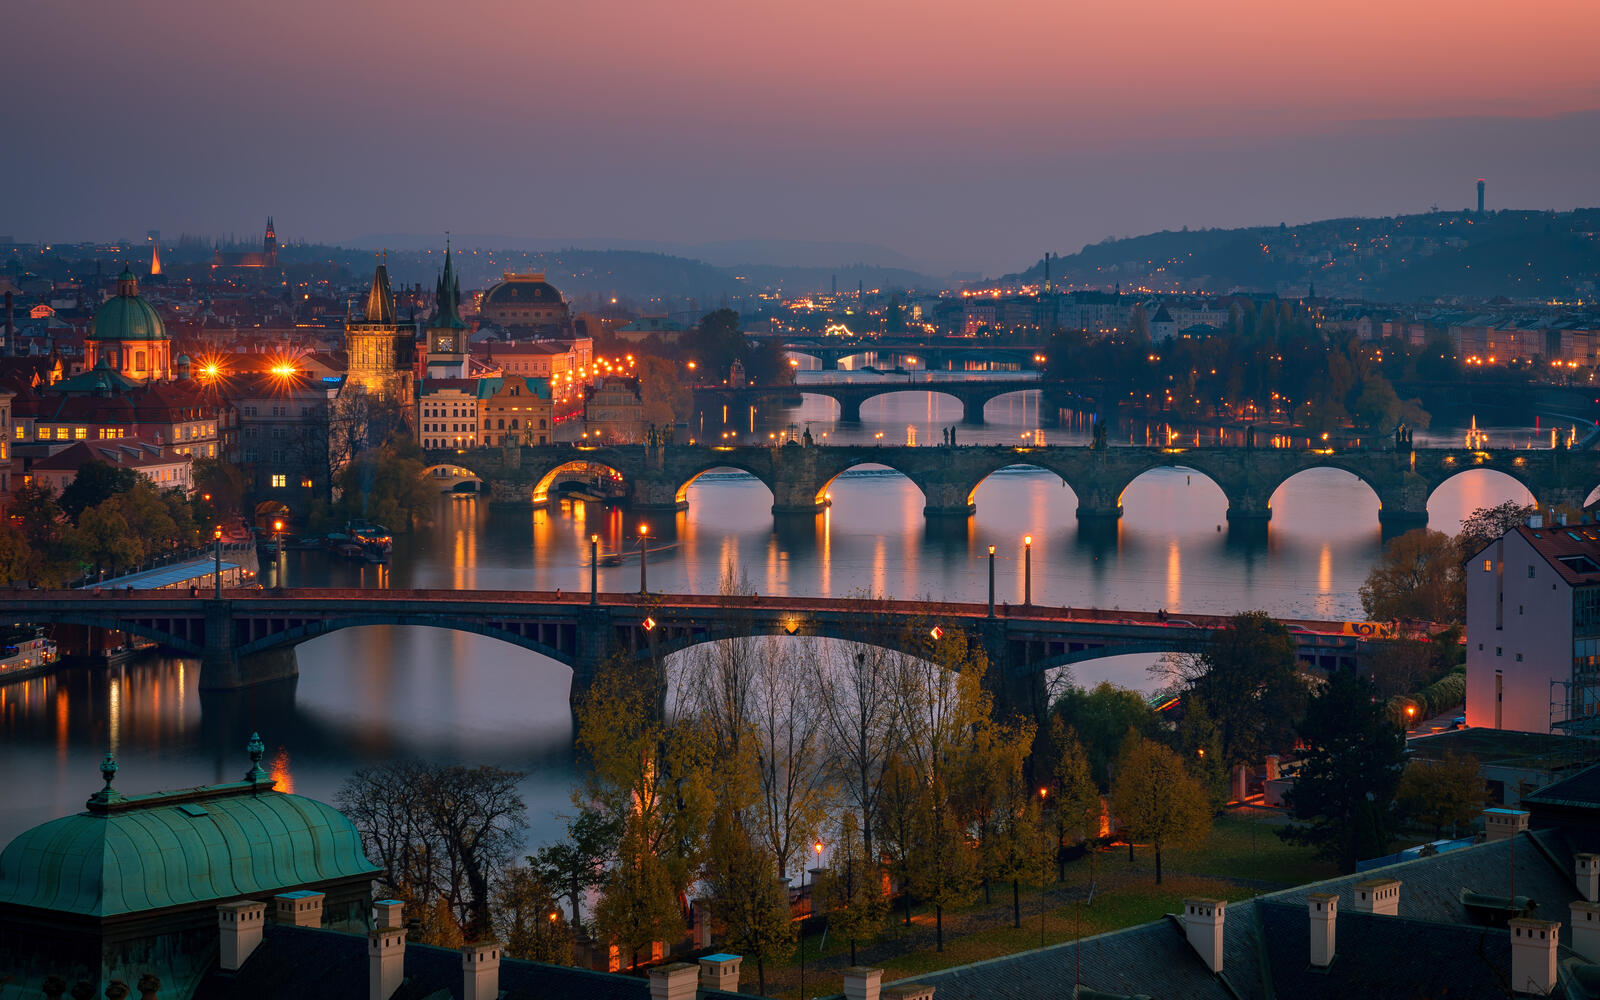 Wallpapers bridges Vltava River night cities on the desktop